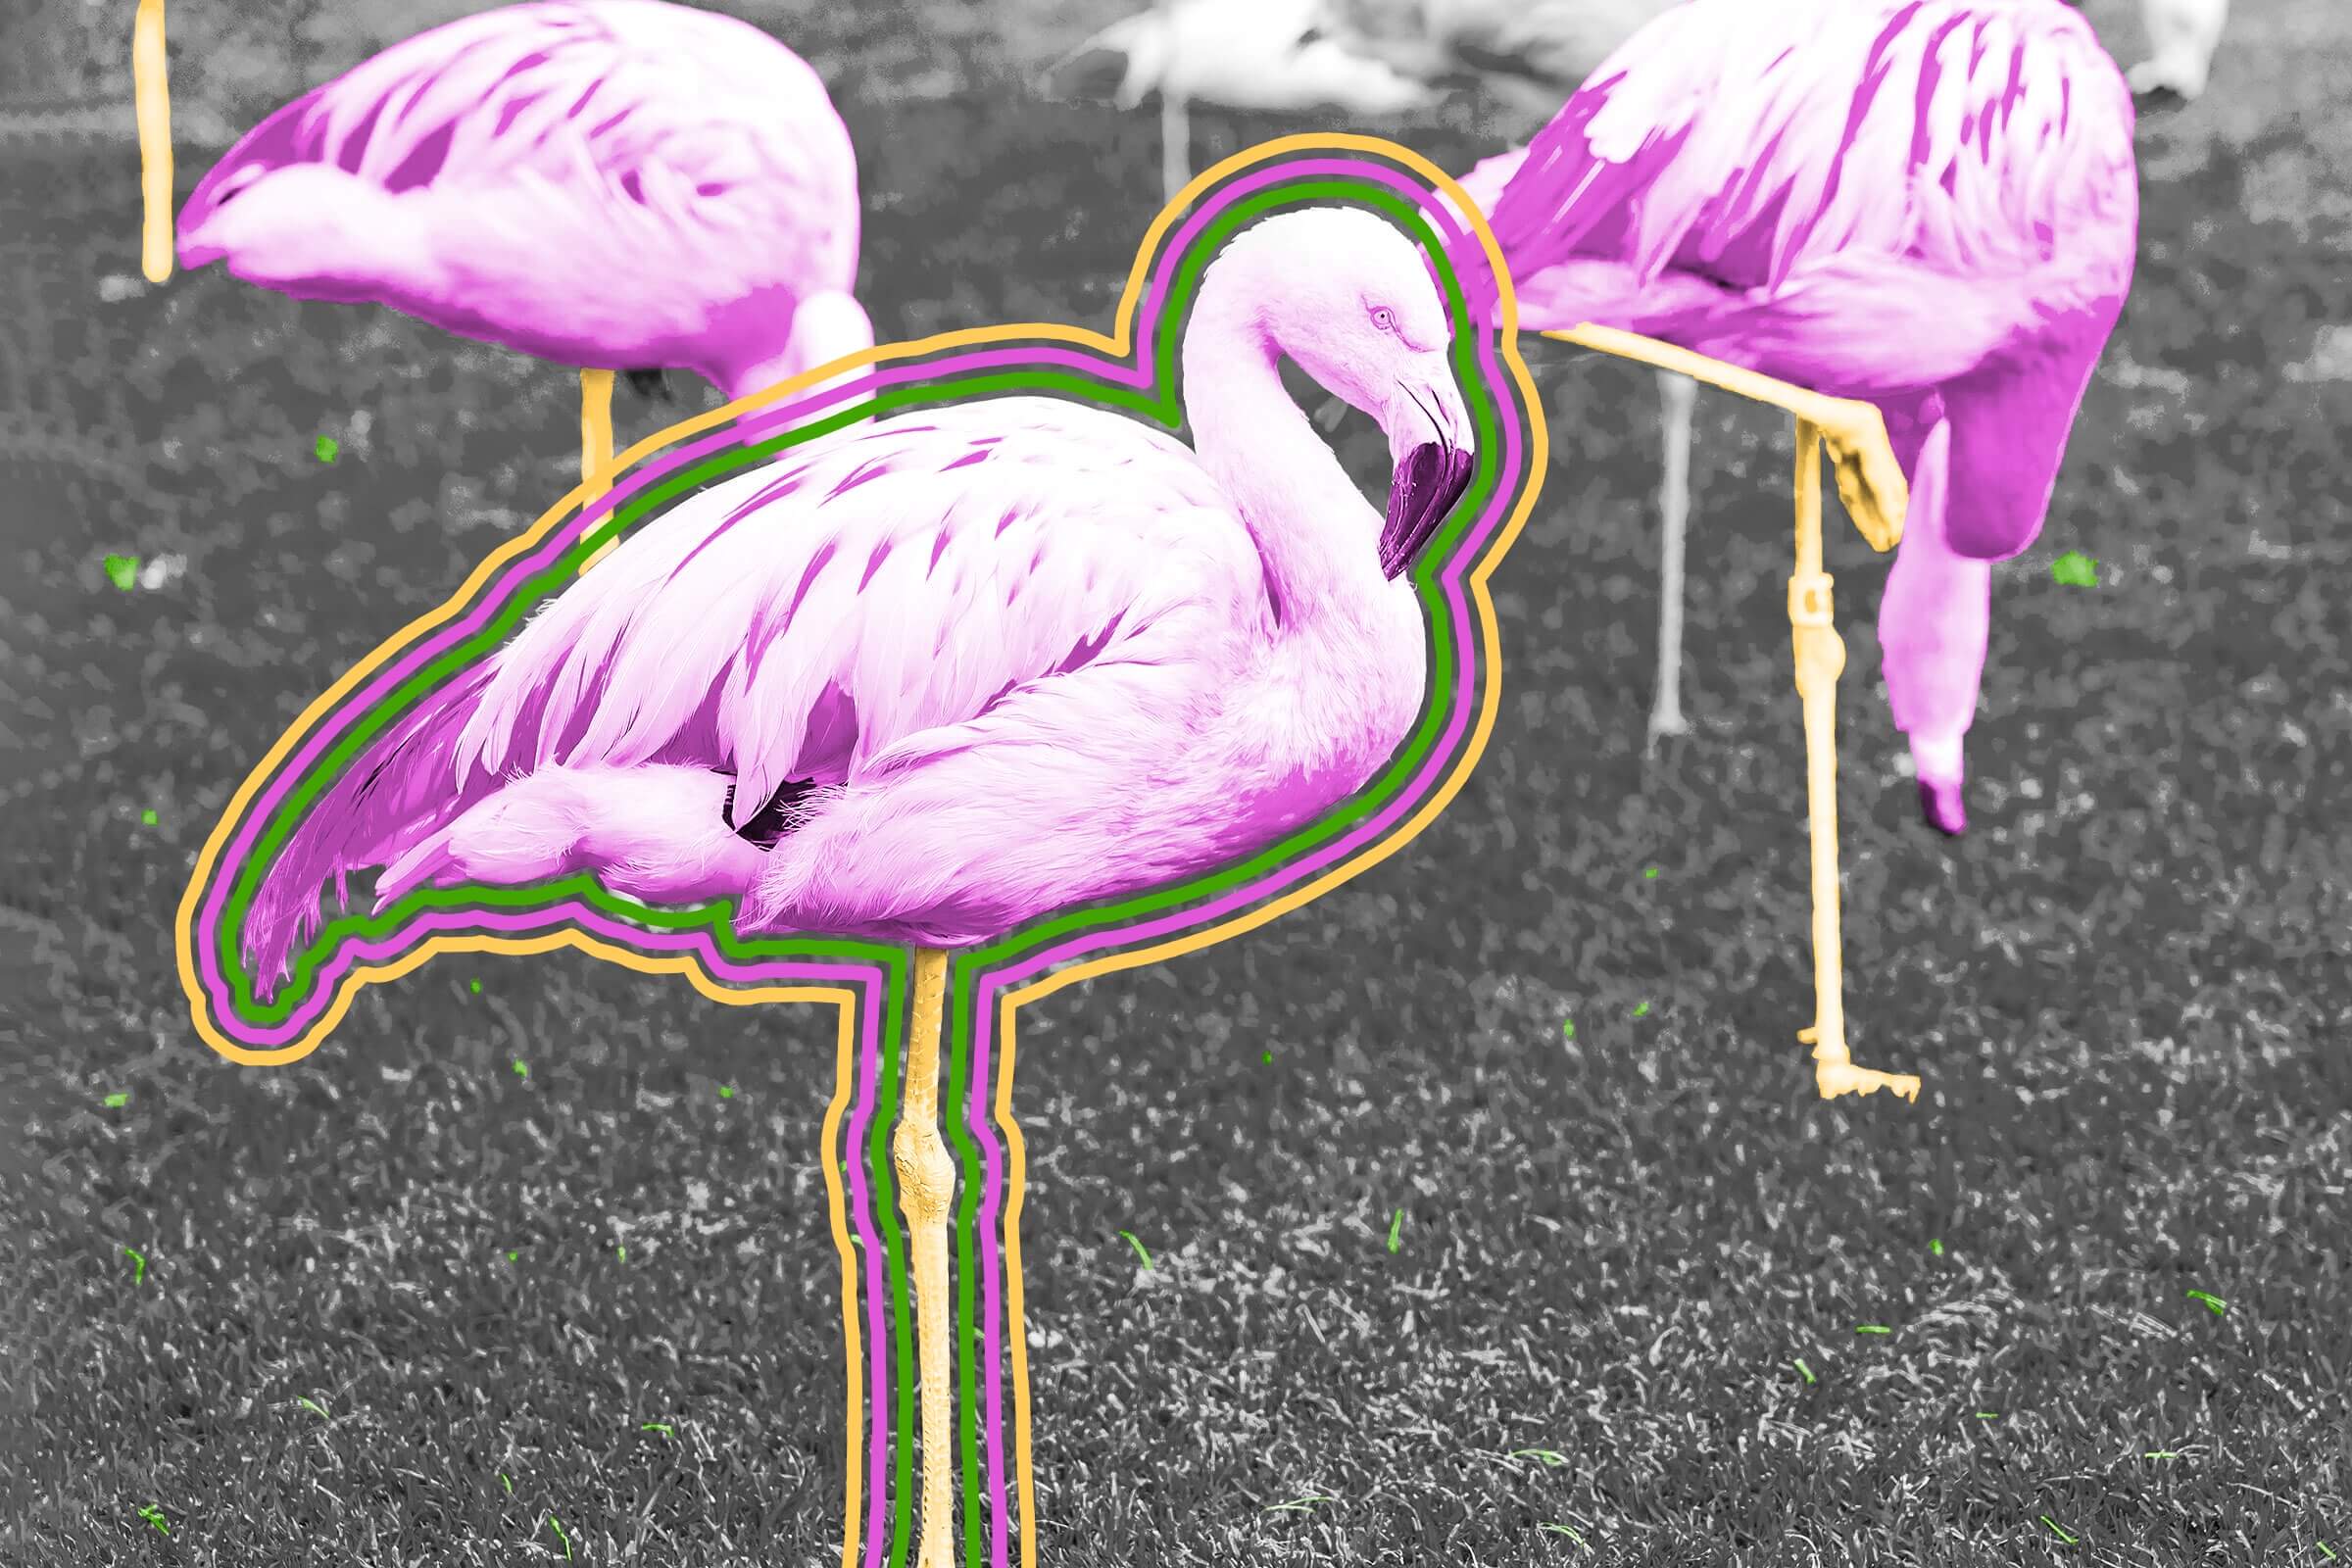 Flamingos can sleep standing on one leg.